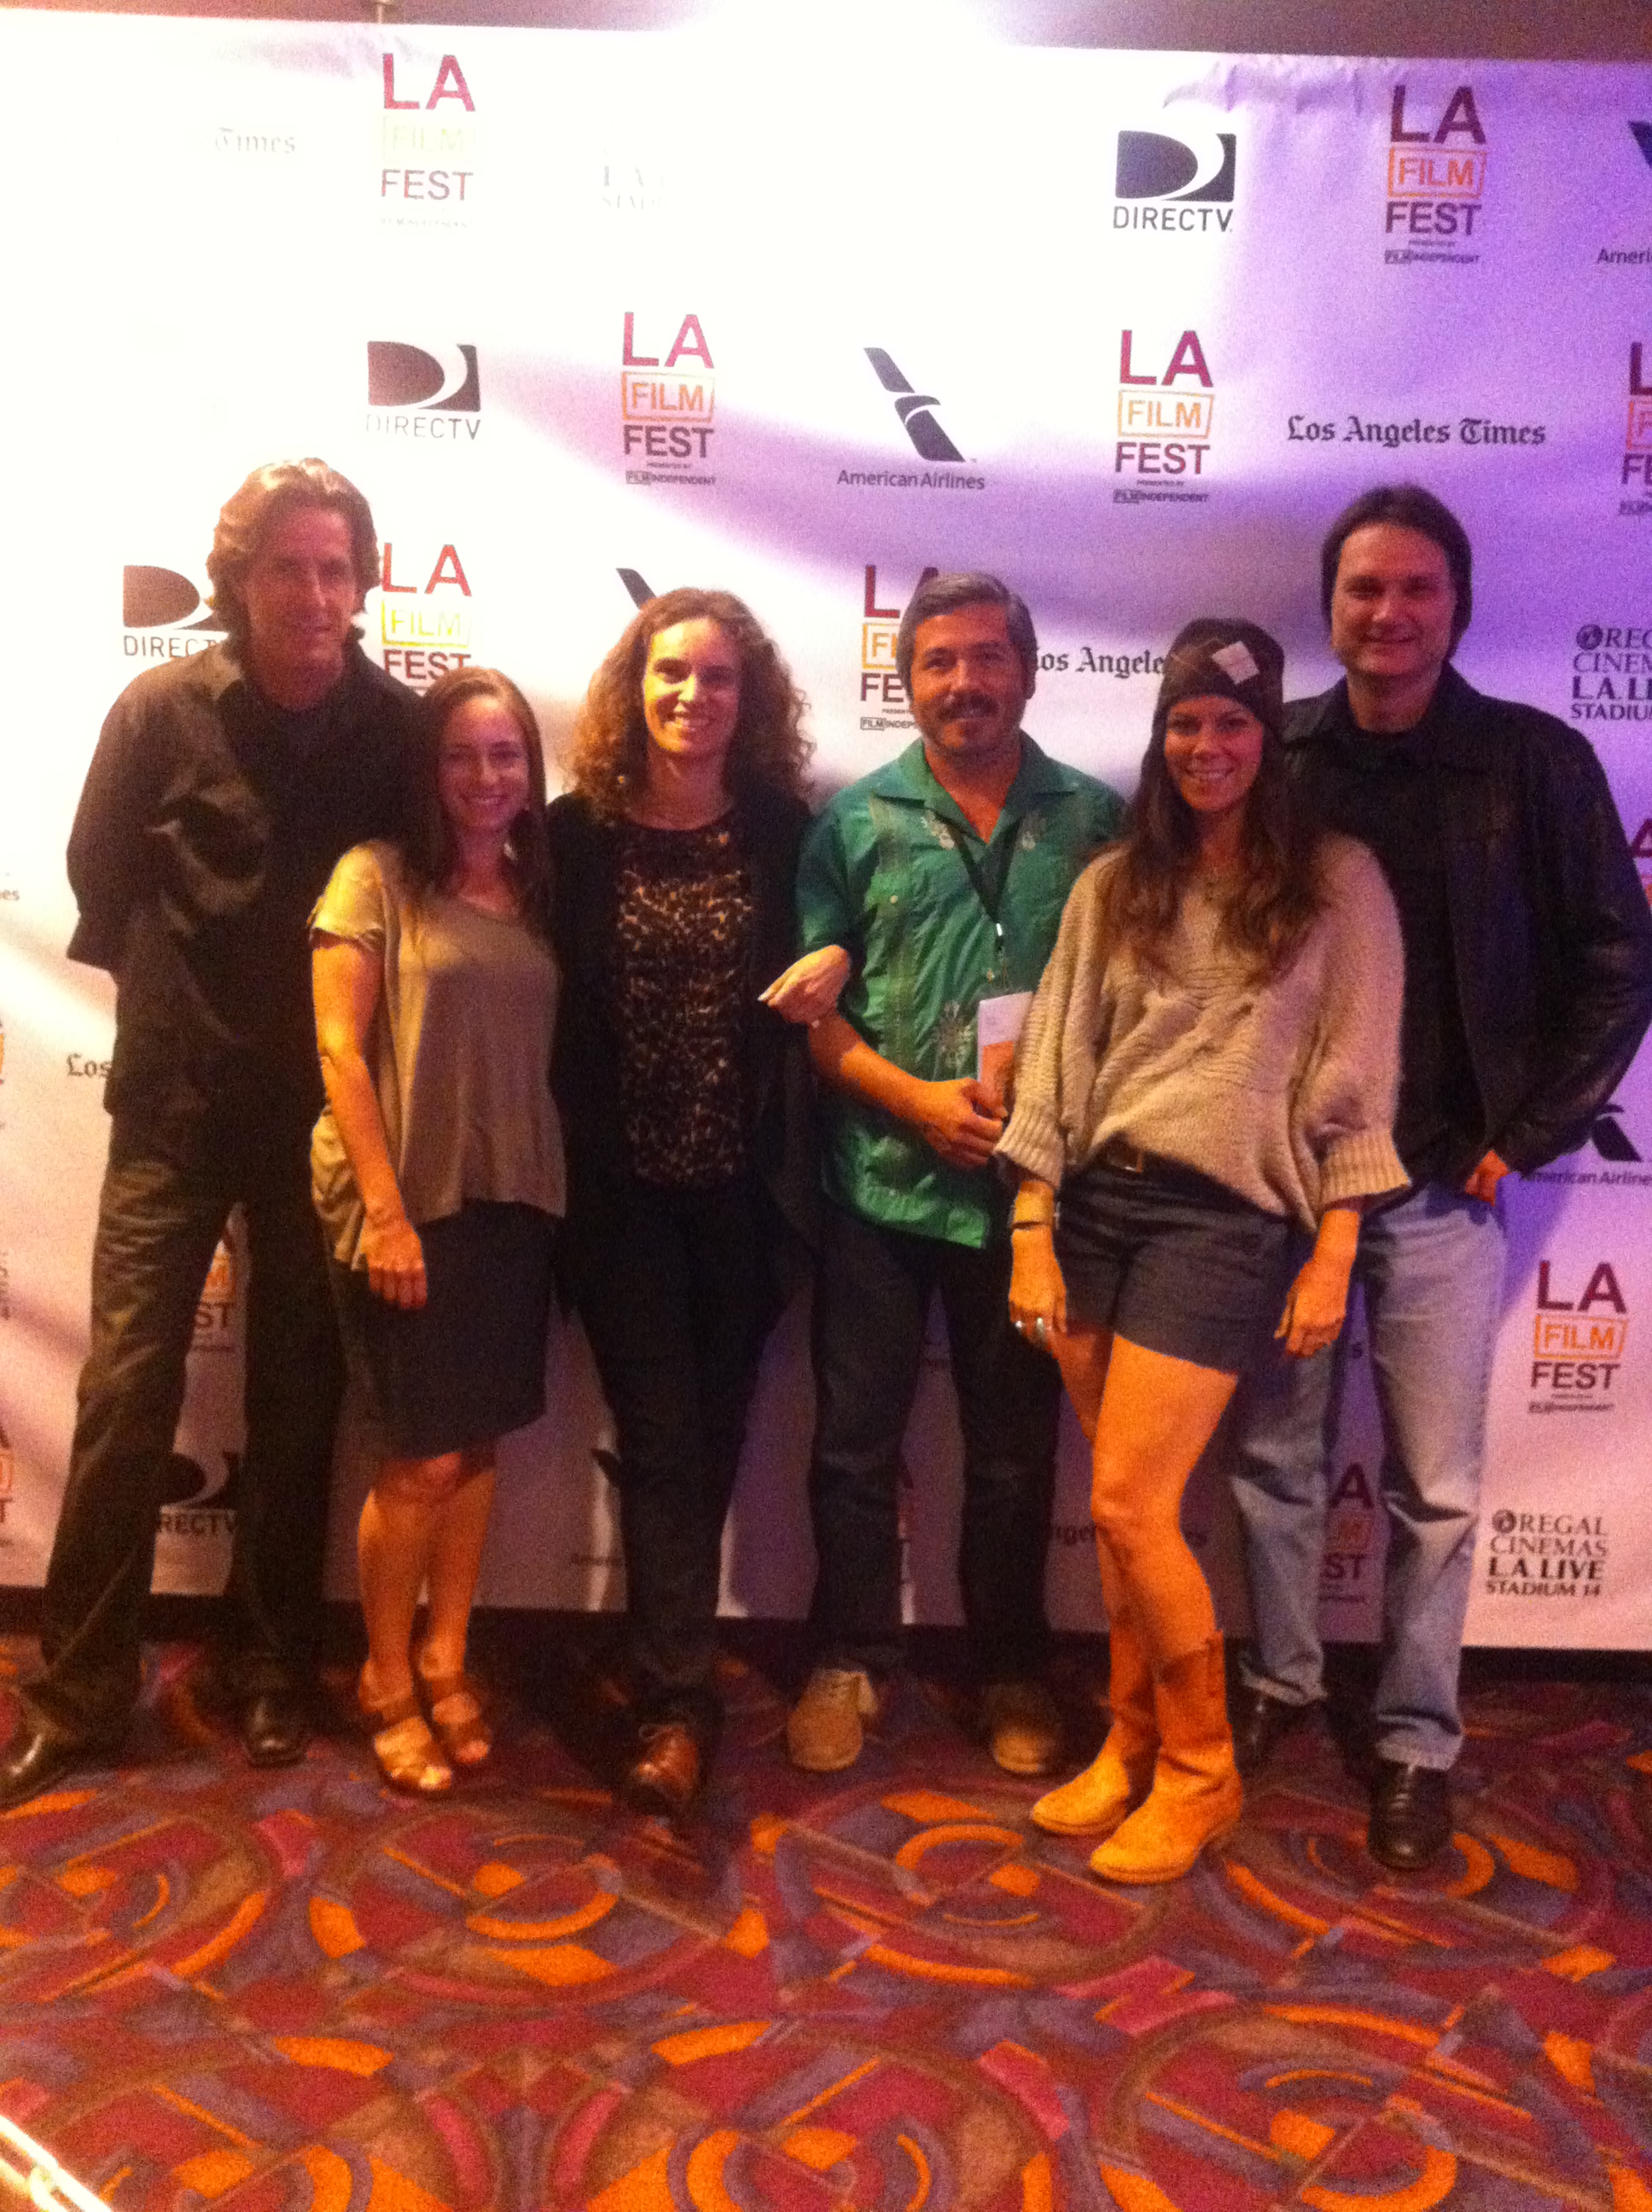 Primate Cinema: Apes As Family at 2013 LA Film Fest